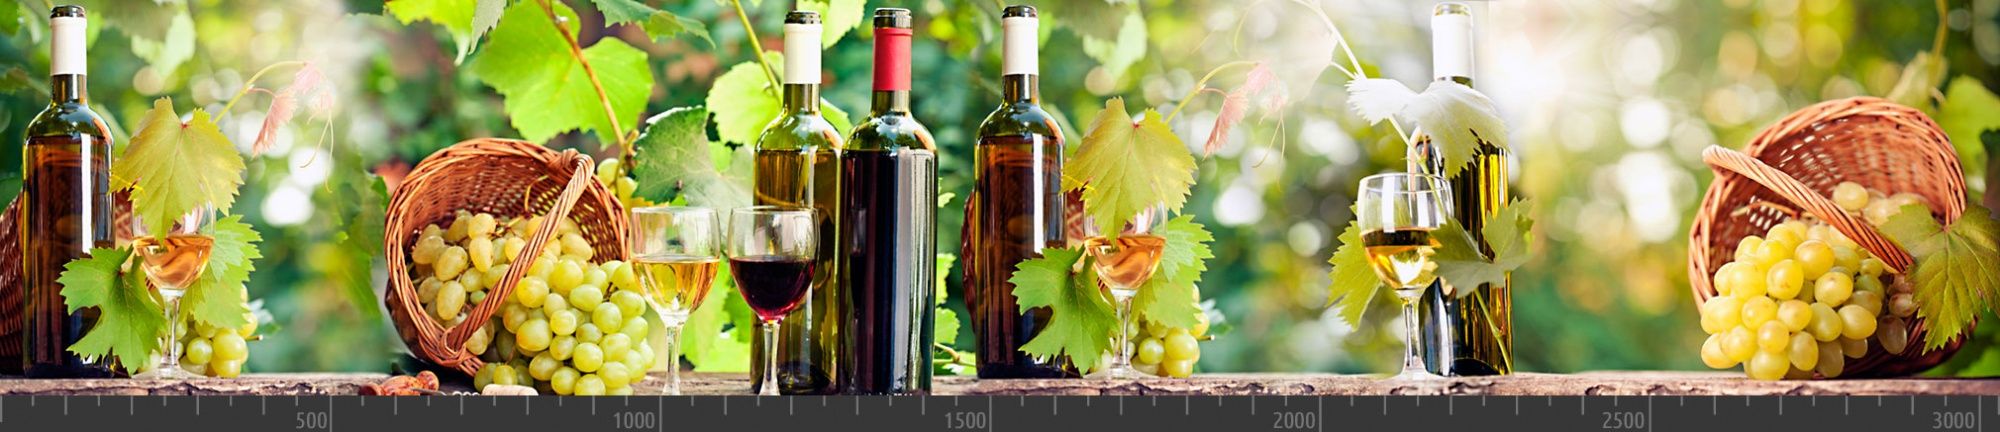 Фартук для кухни виноград и вино